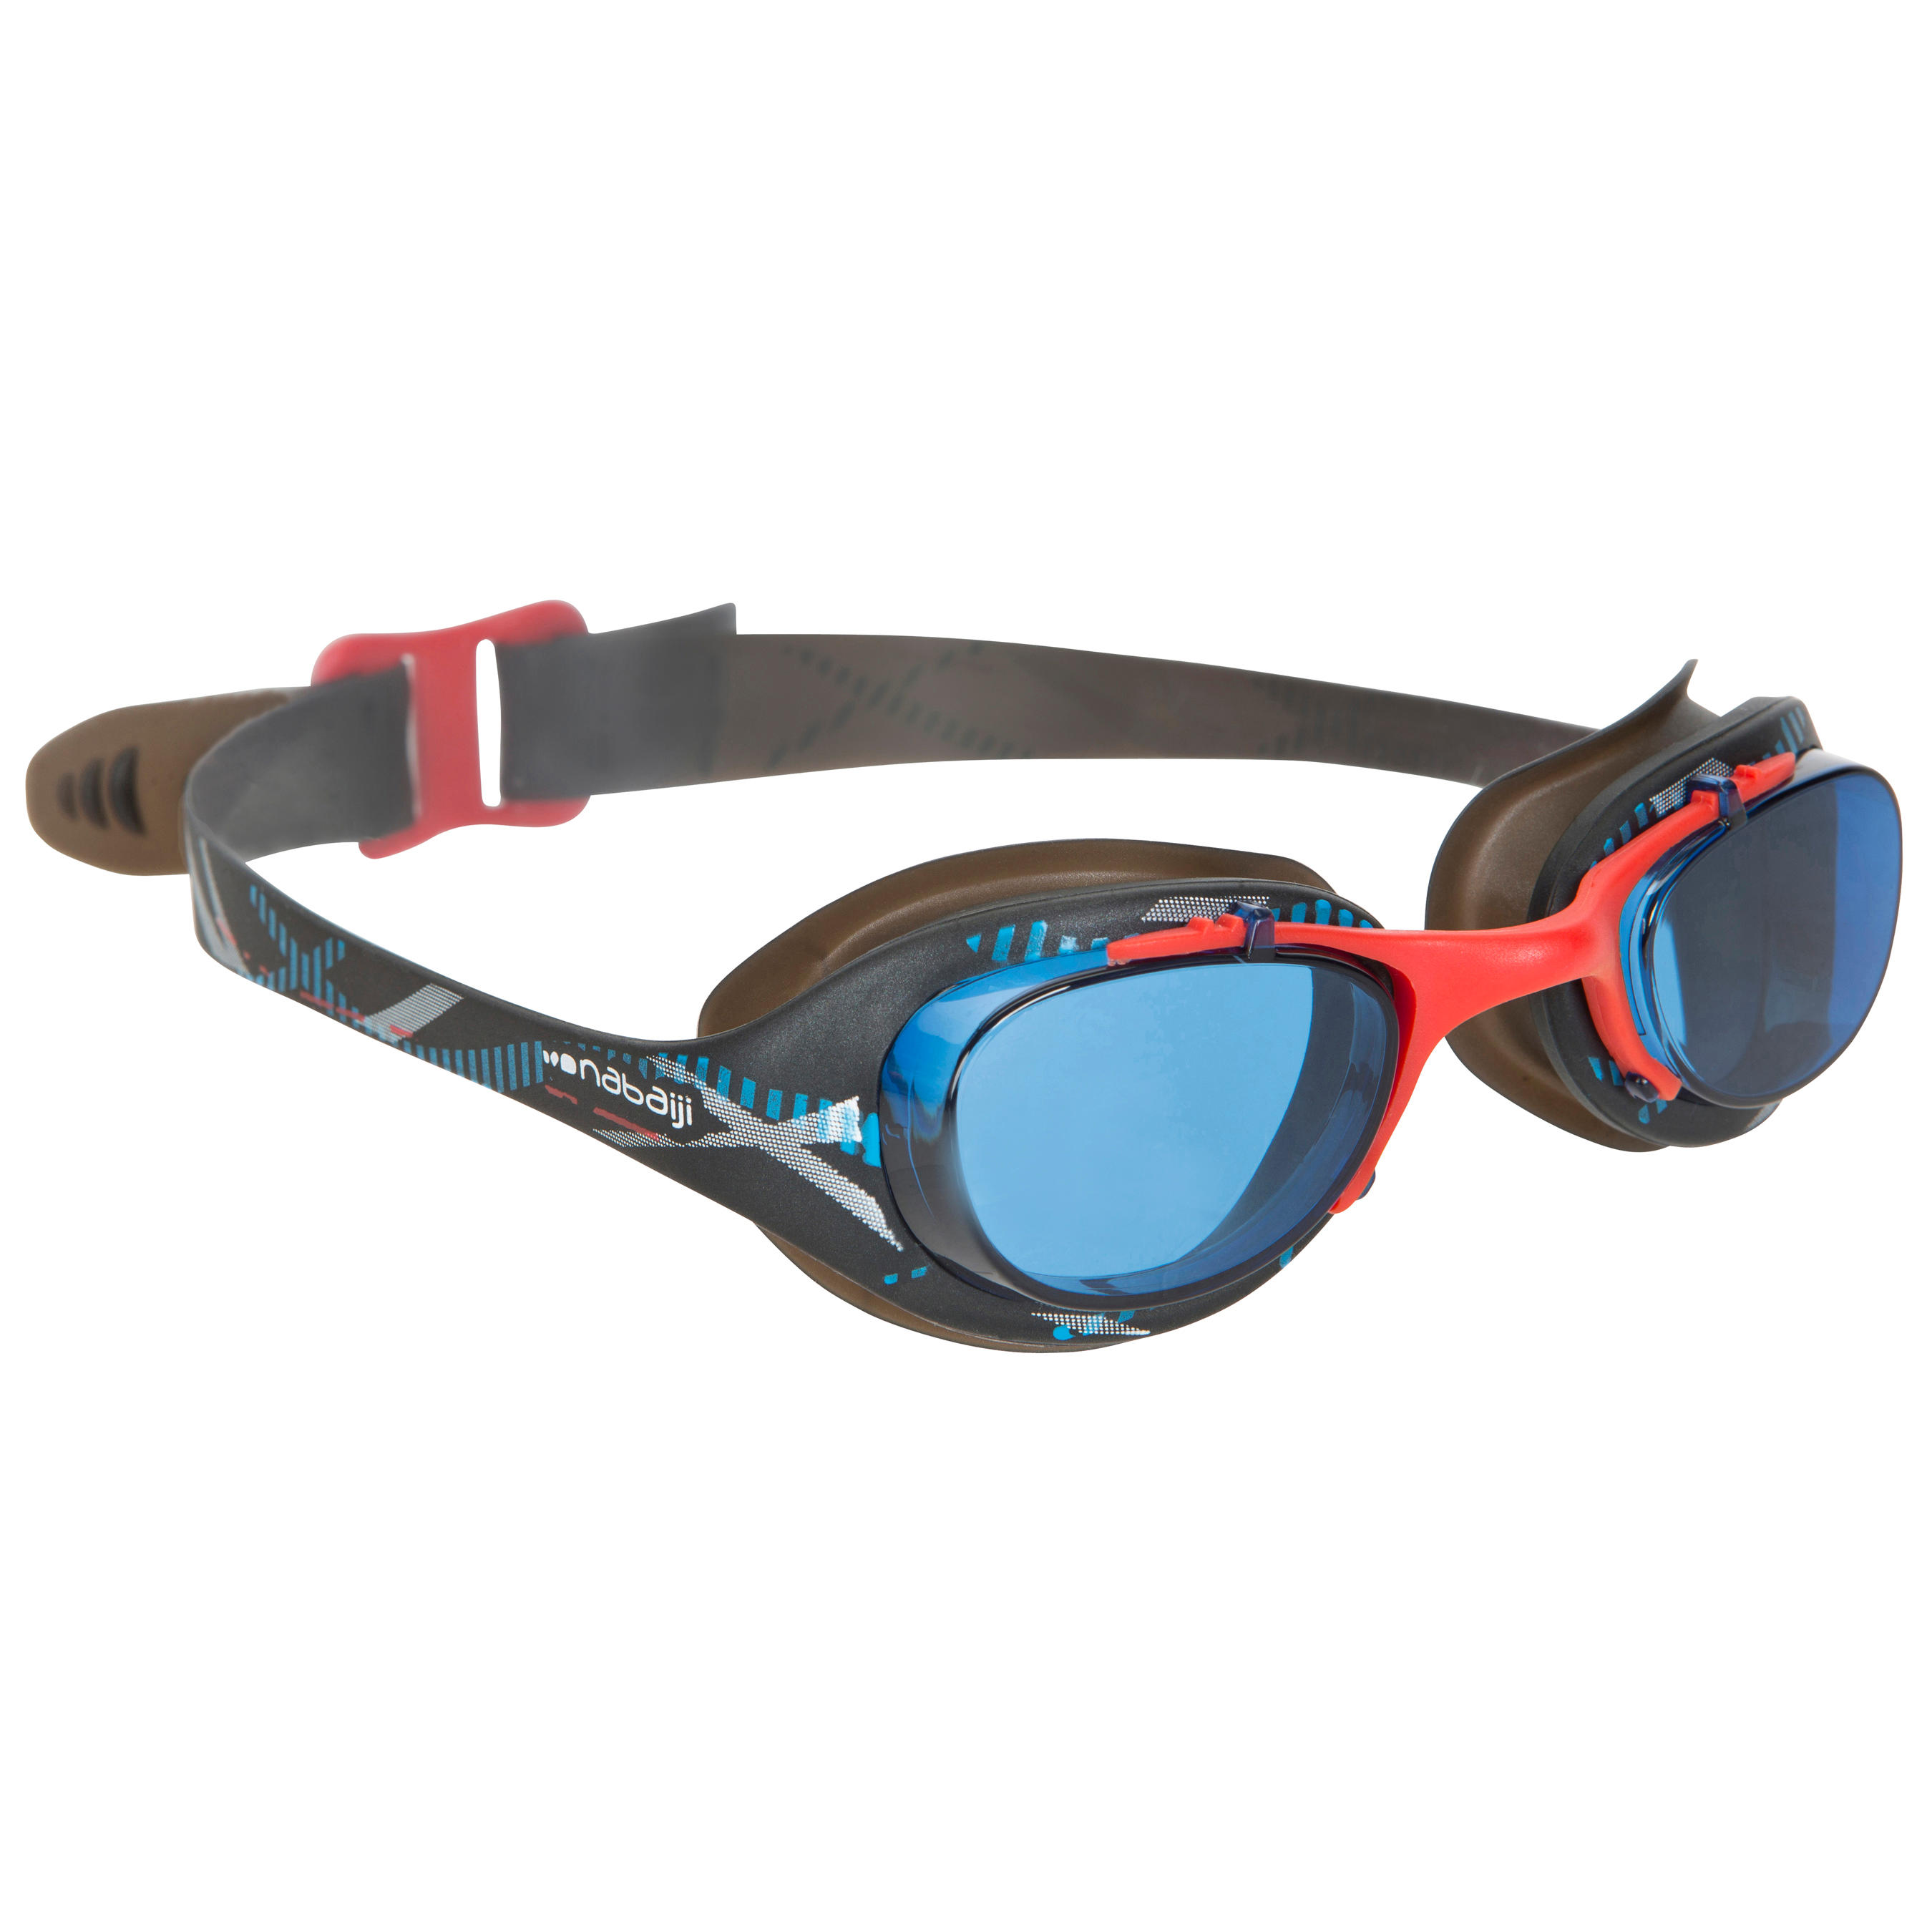 NABAIJI XBASE LASSO swimming goggles - Black Red